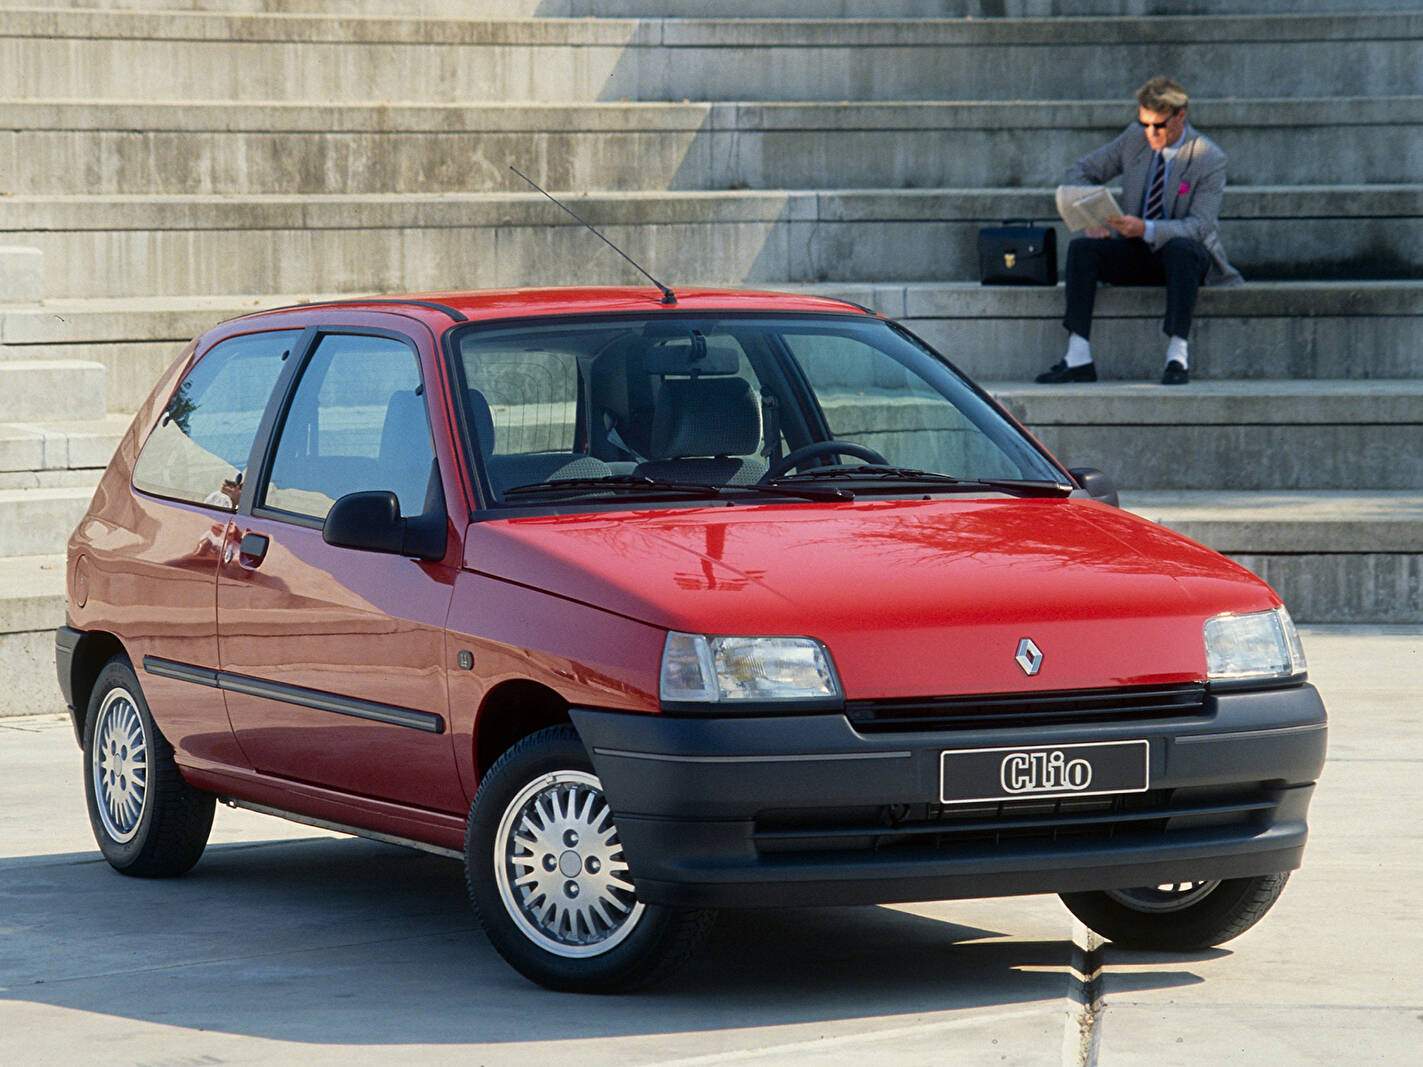 Fiche technique Renault Clio 1.7 (19911992)